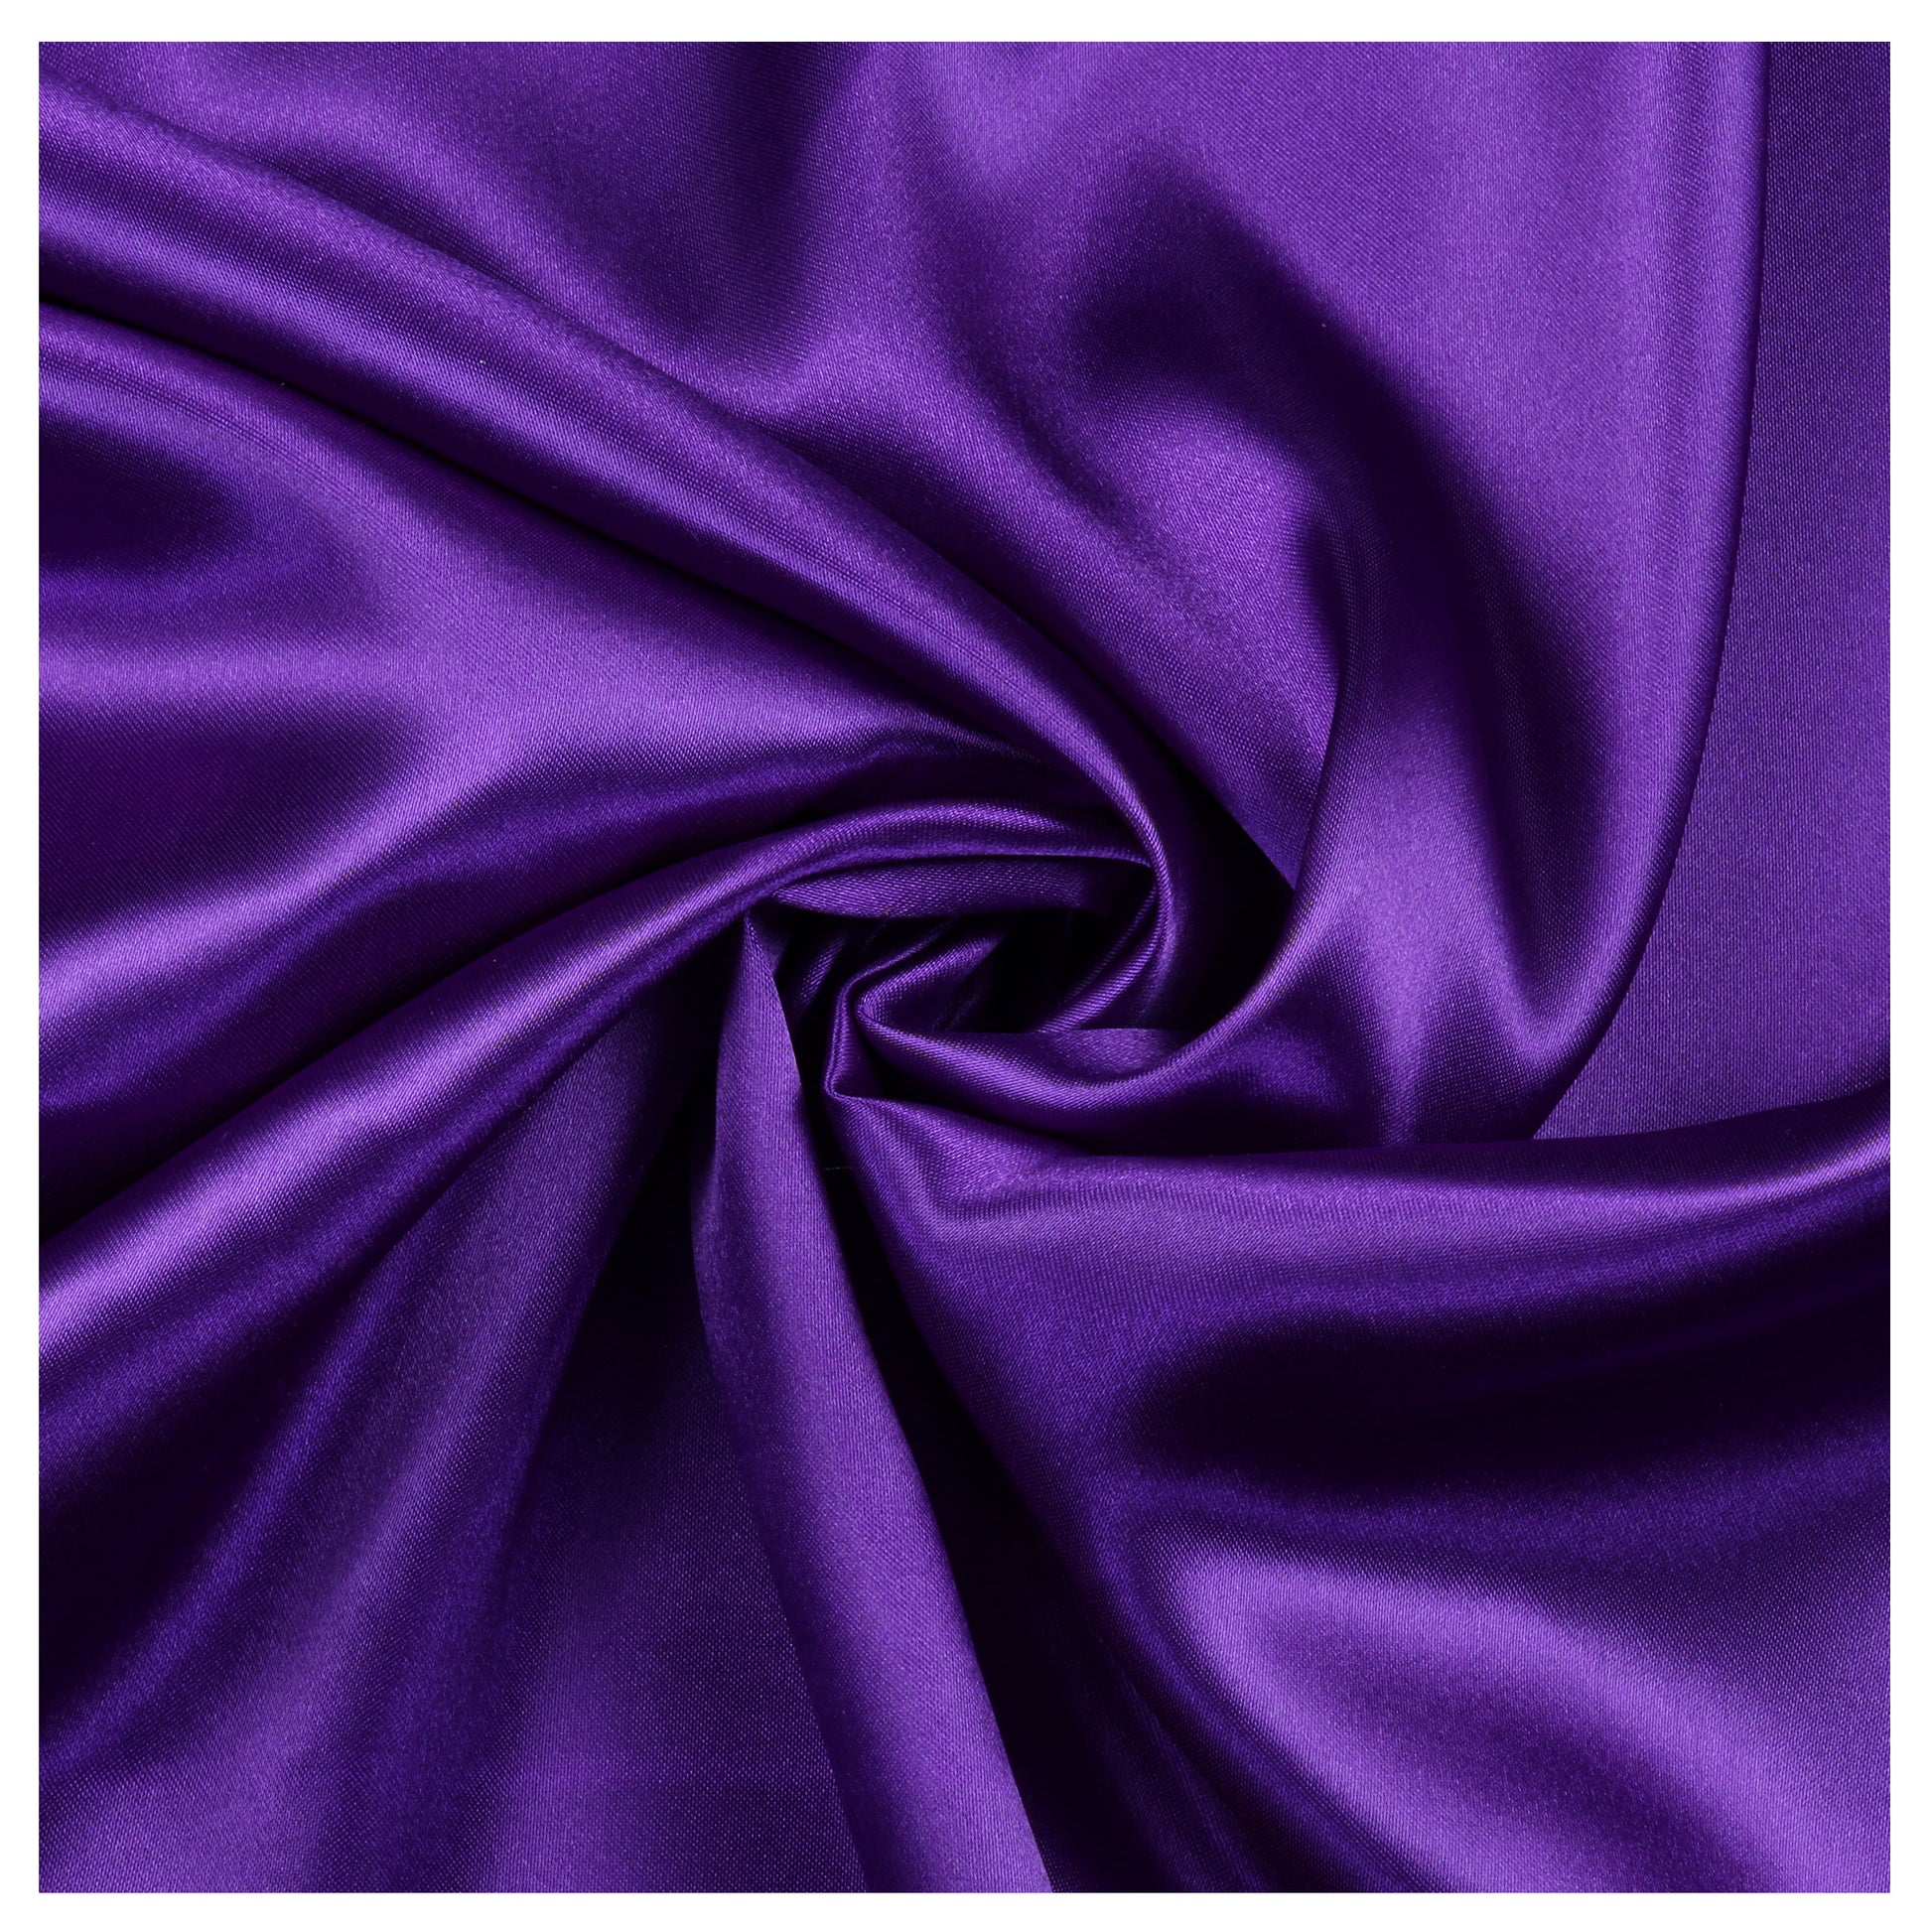 Cadbury Purple,06a46fd8-c7a4-4f0c-8342-221a729068f2